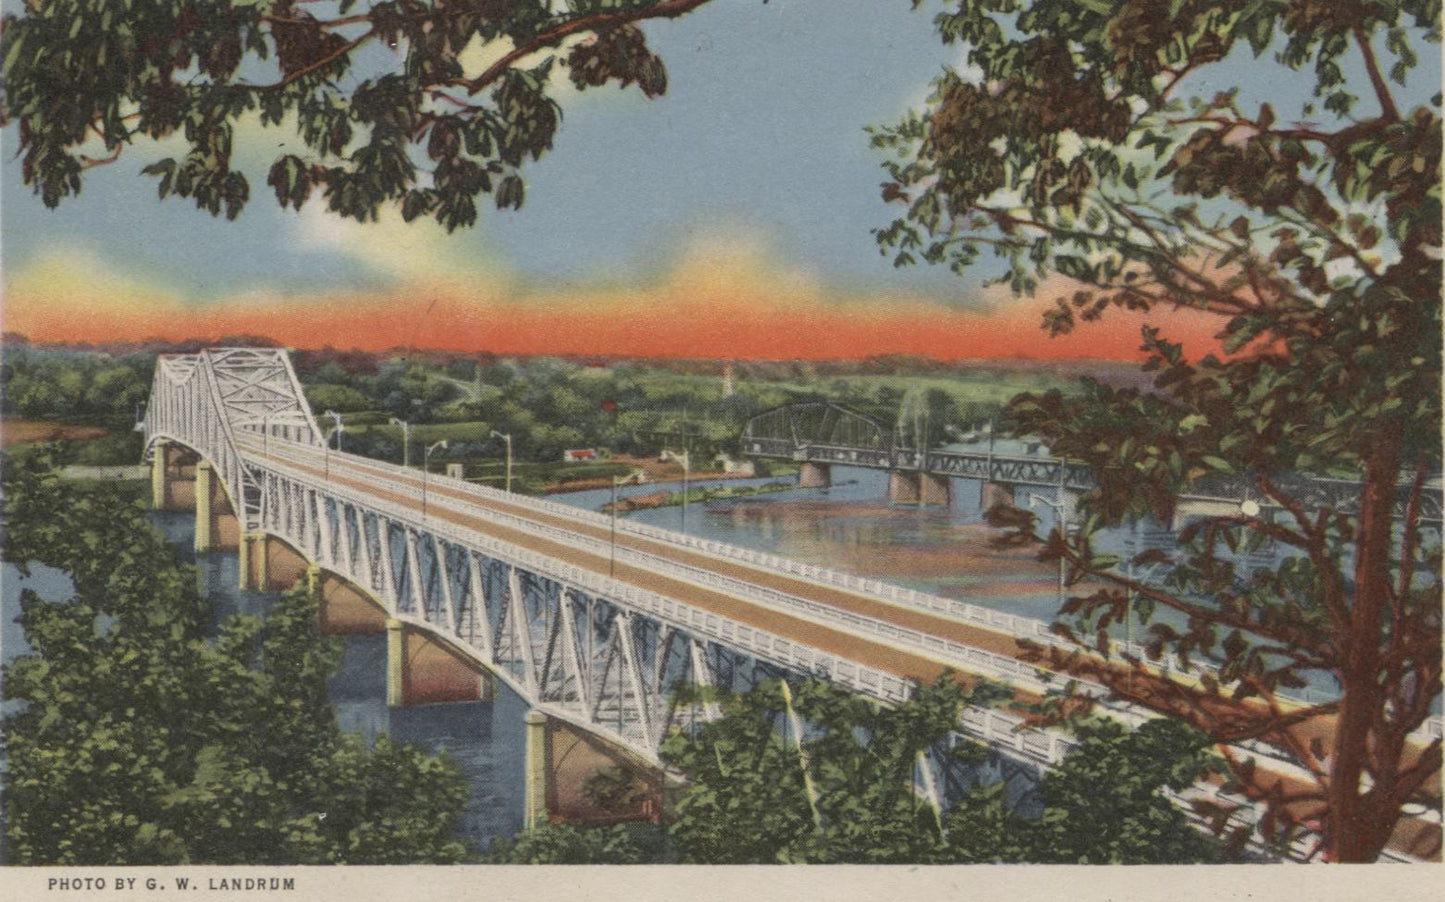 Alabama "The Star of the South" Vintage Souvenir Postcard Folder